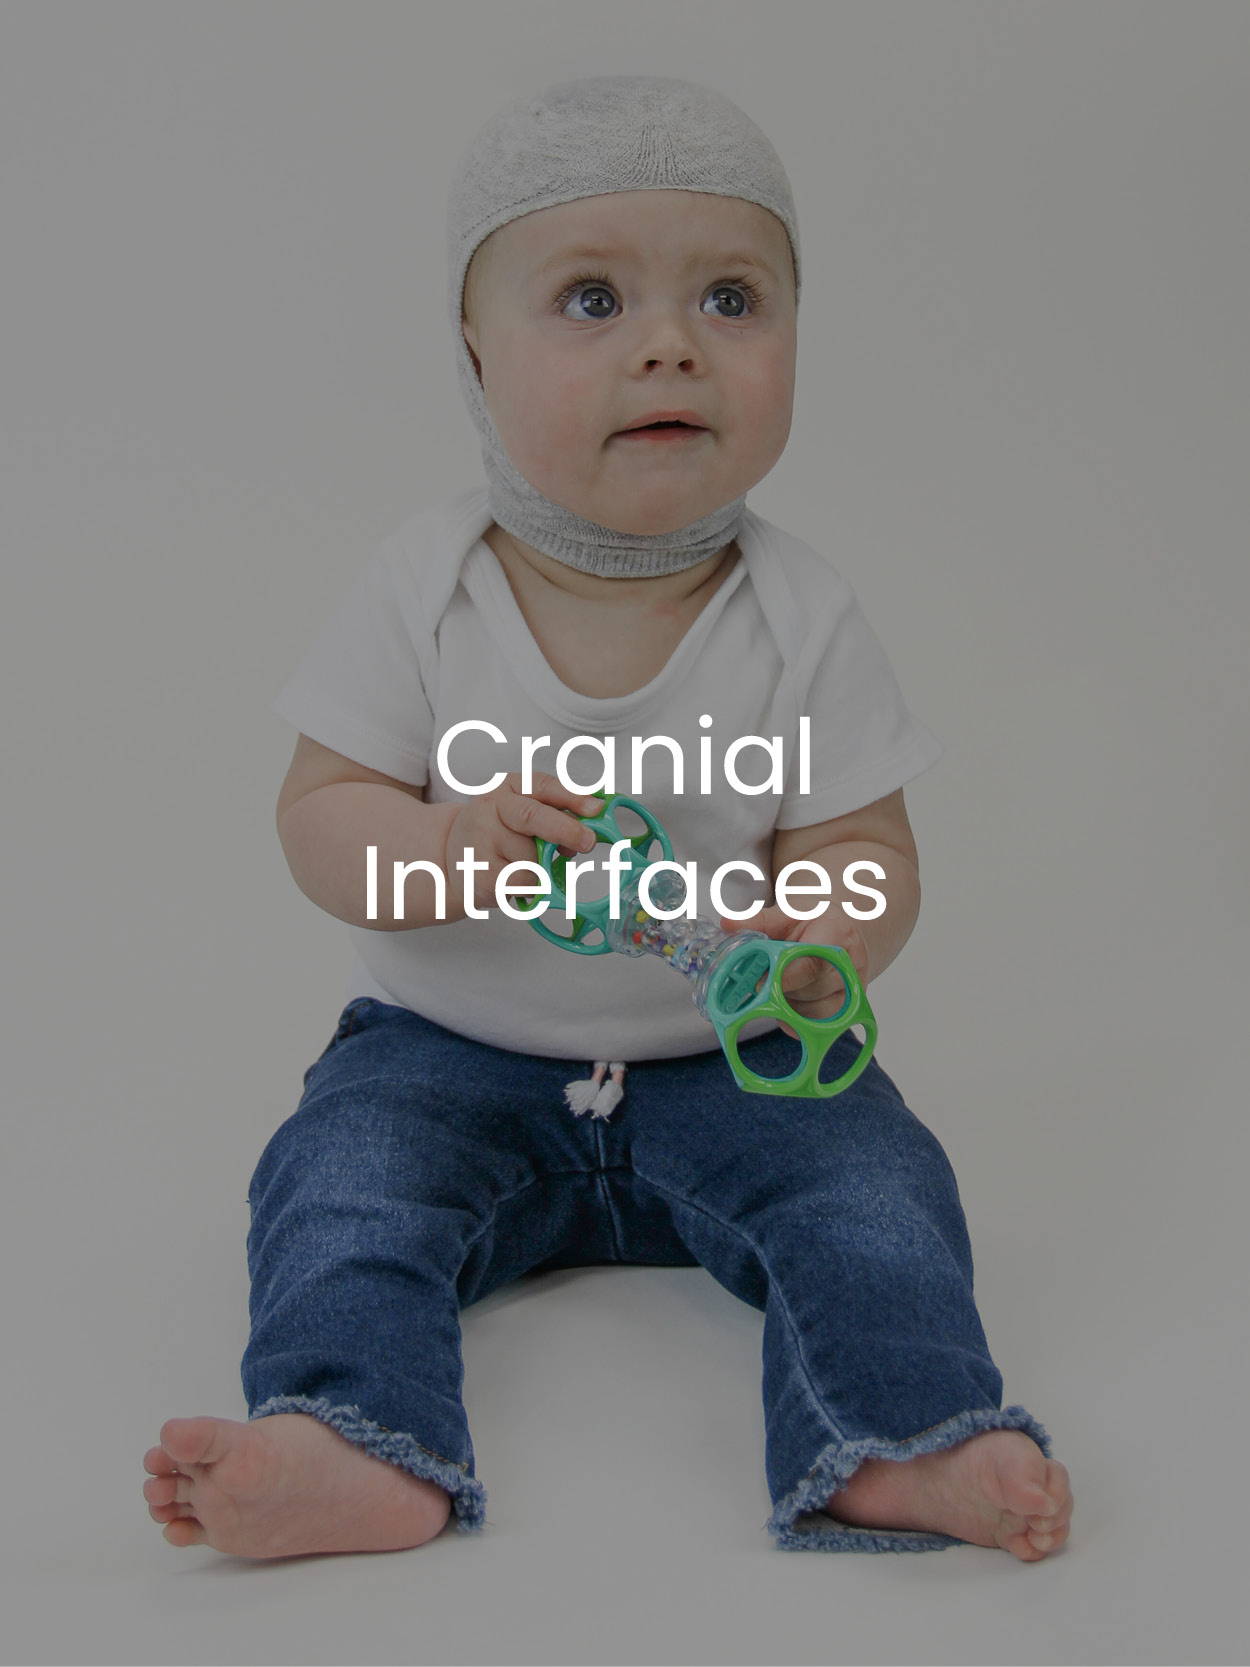 Cranial Interfaces